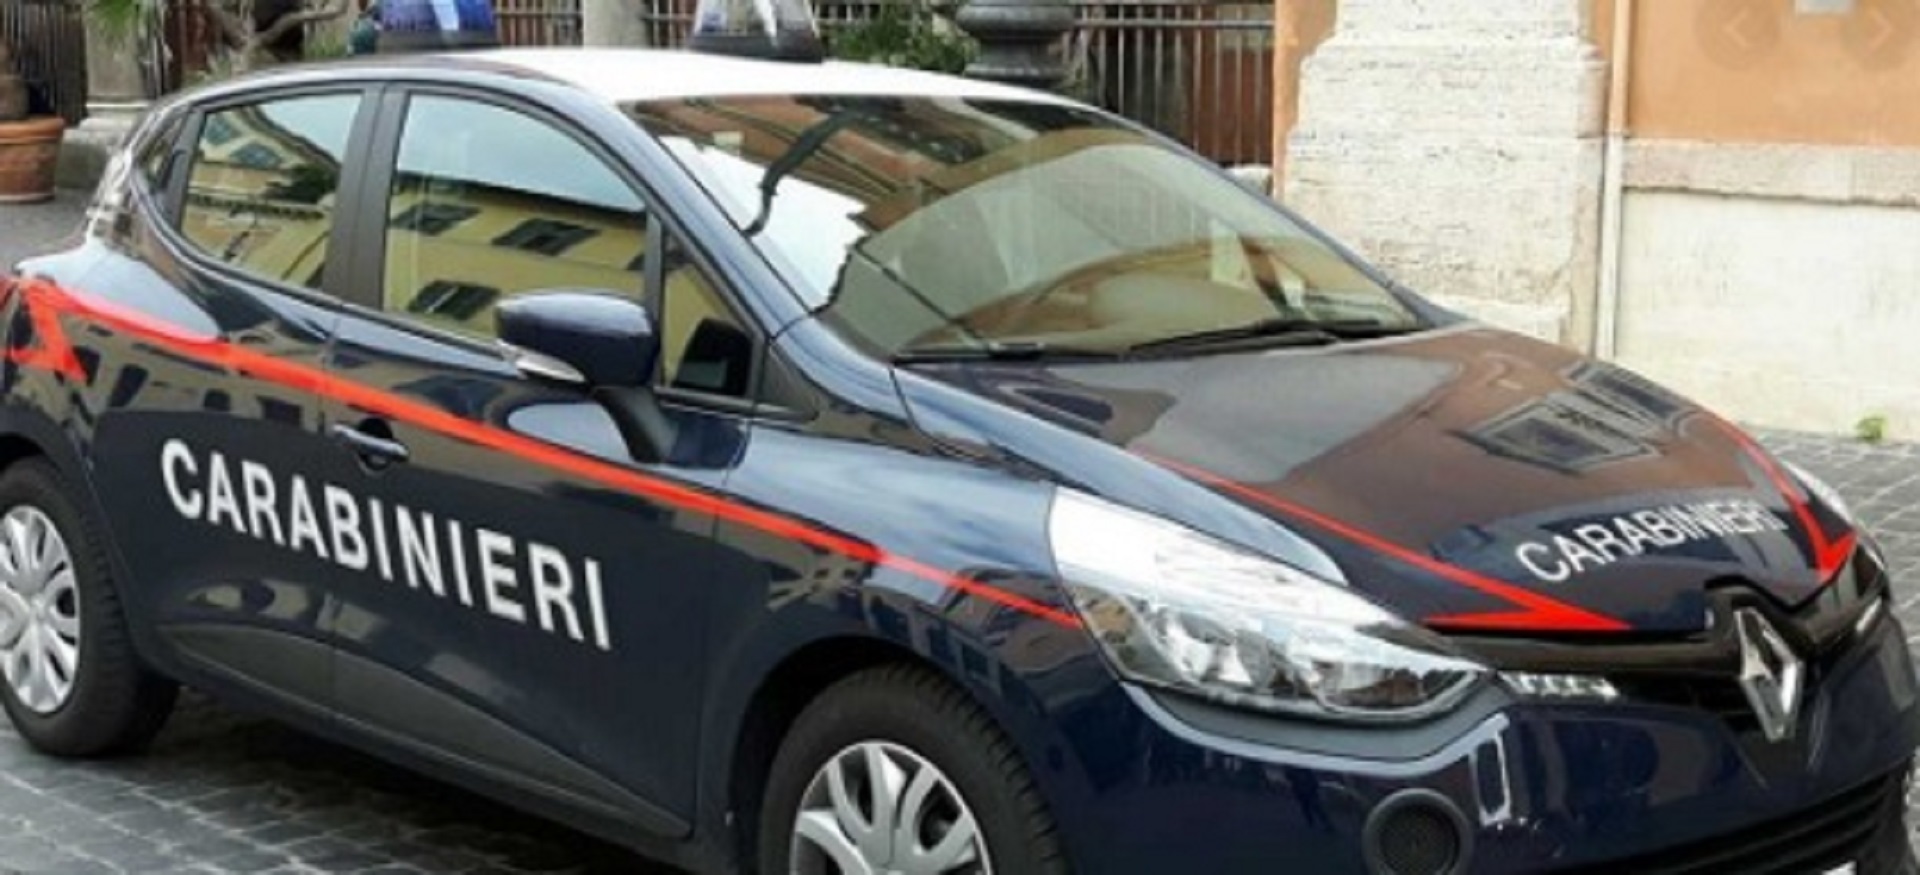 Ruba monopattino elettrico davanti ai carabinieri: denunciato 44enne